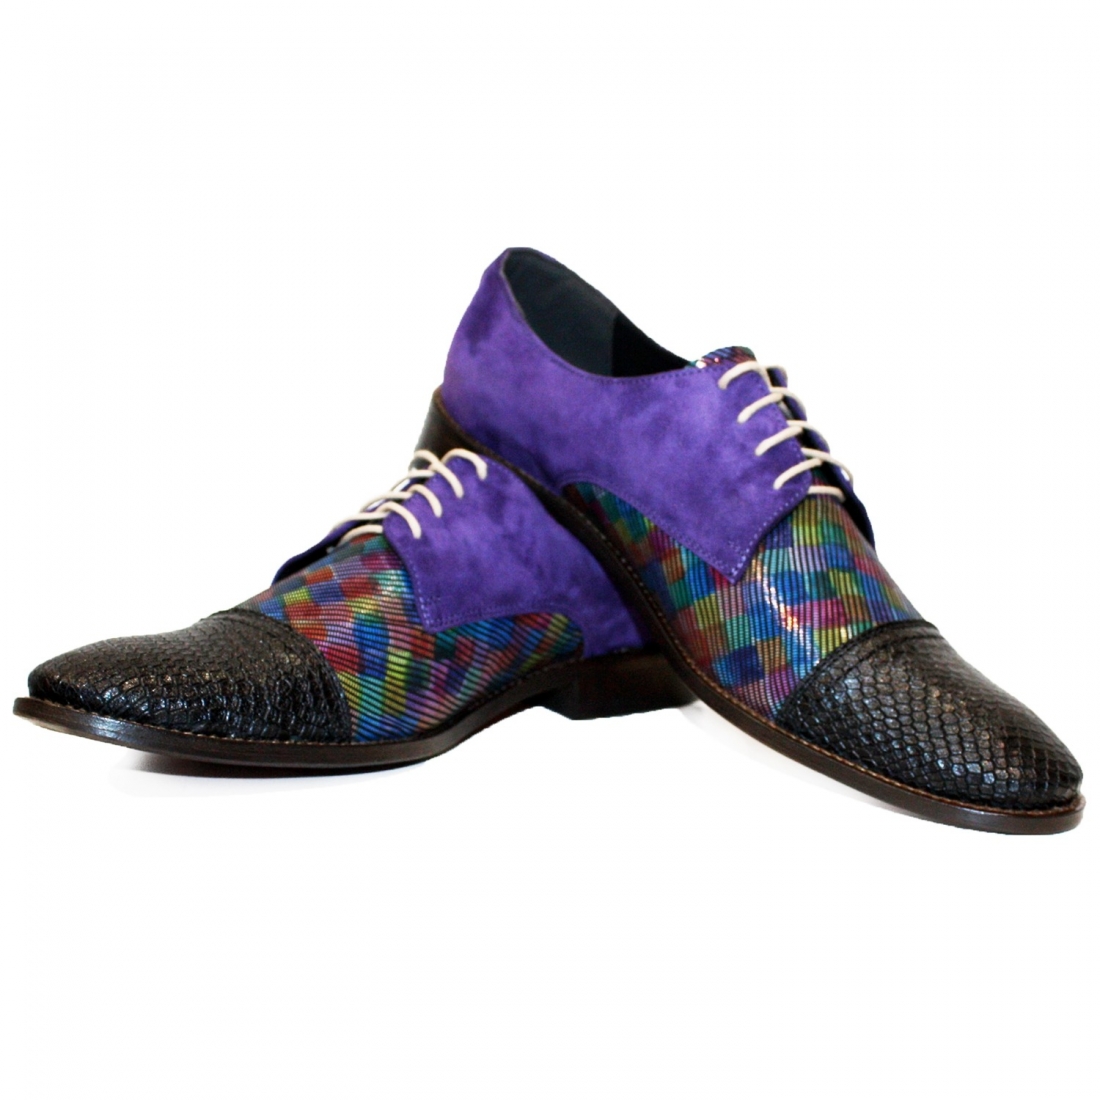 Modello Osklivello - Классическая обувь - Handmade Colorful Italian Leather Shoes